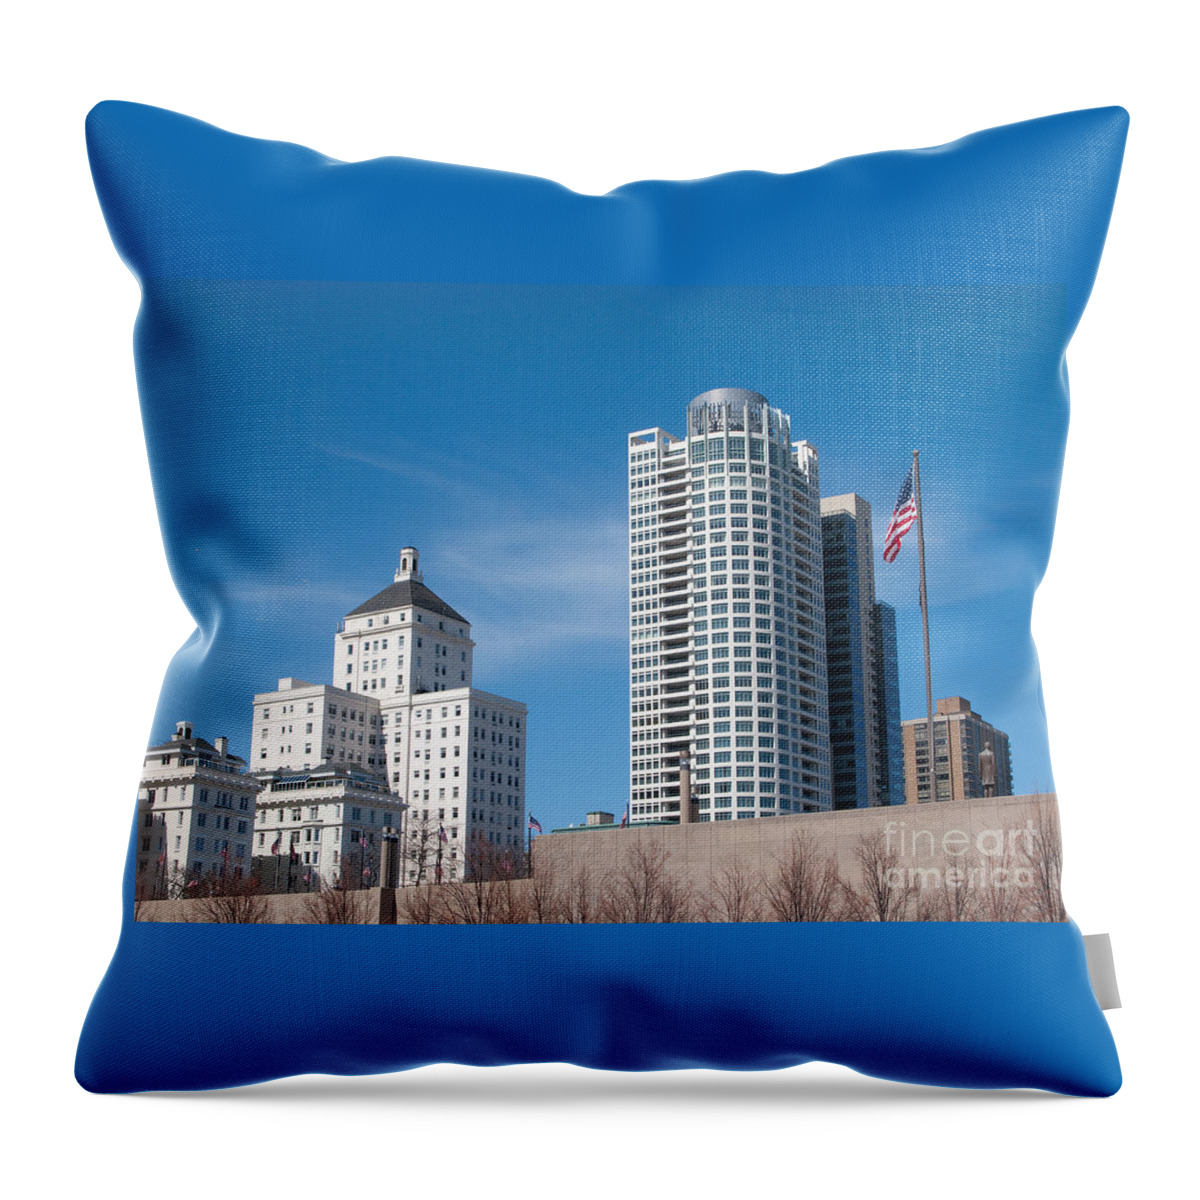 Milwaukee Throw Pillow featuring the photograph Milwaukee Cityscape by Ann Horn